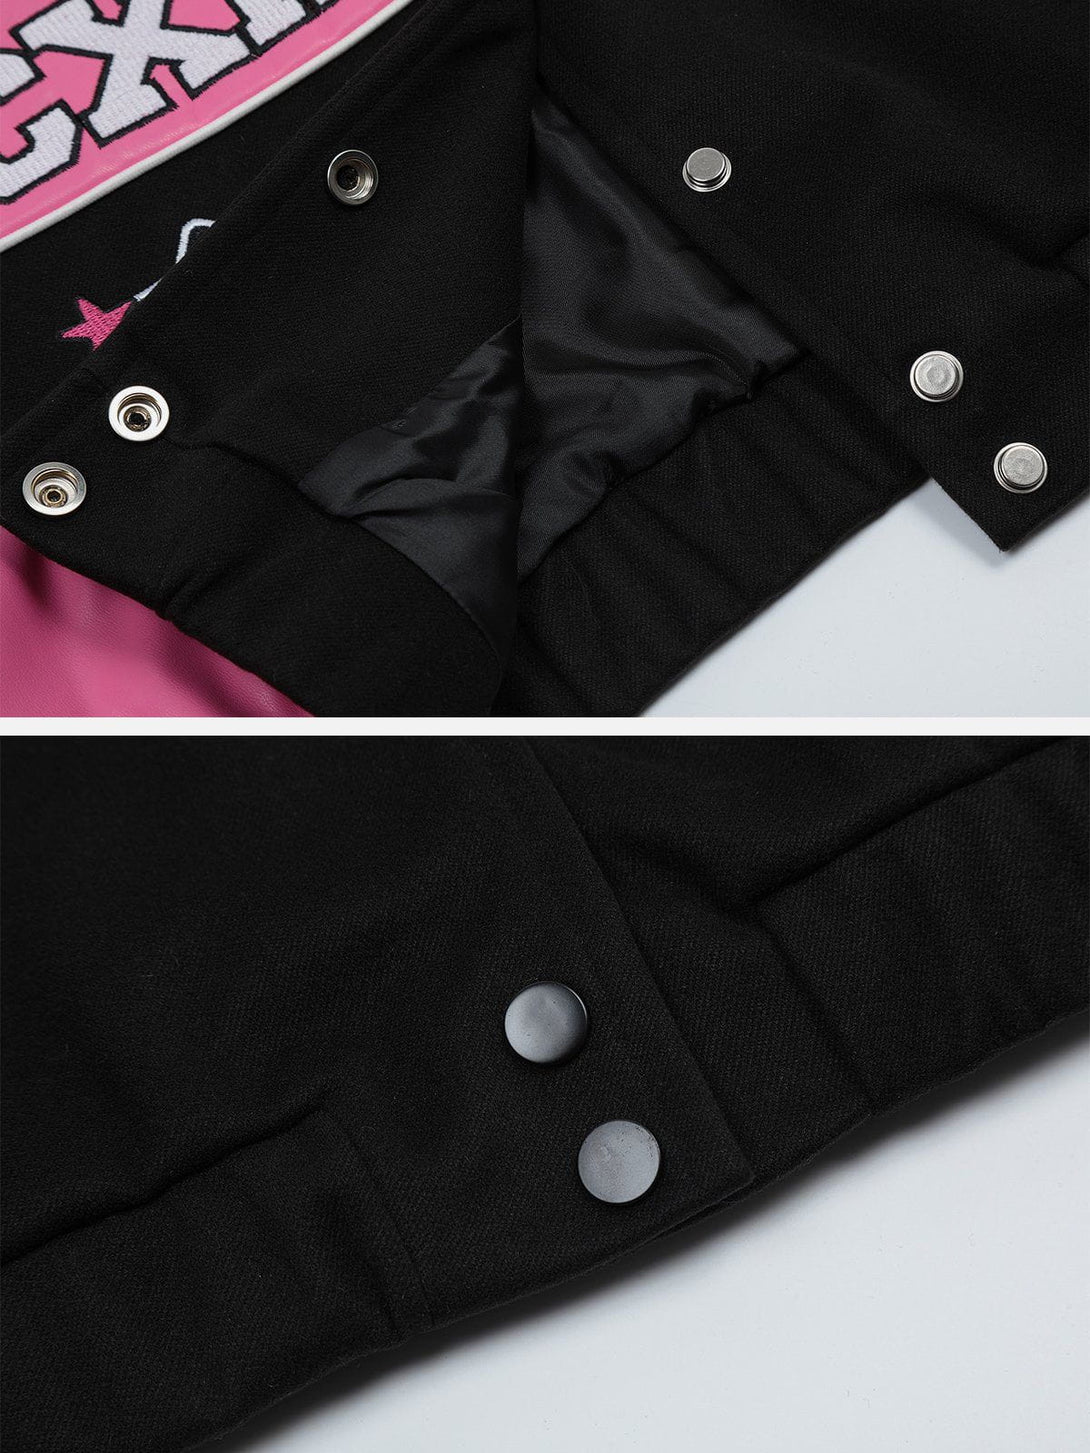 Majesda® - Letters Embroidered Patchwork PU Jacket outfit ideas, streetwear fashion - majesda.com